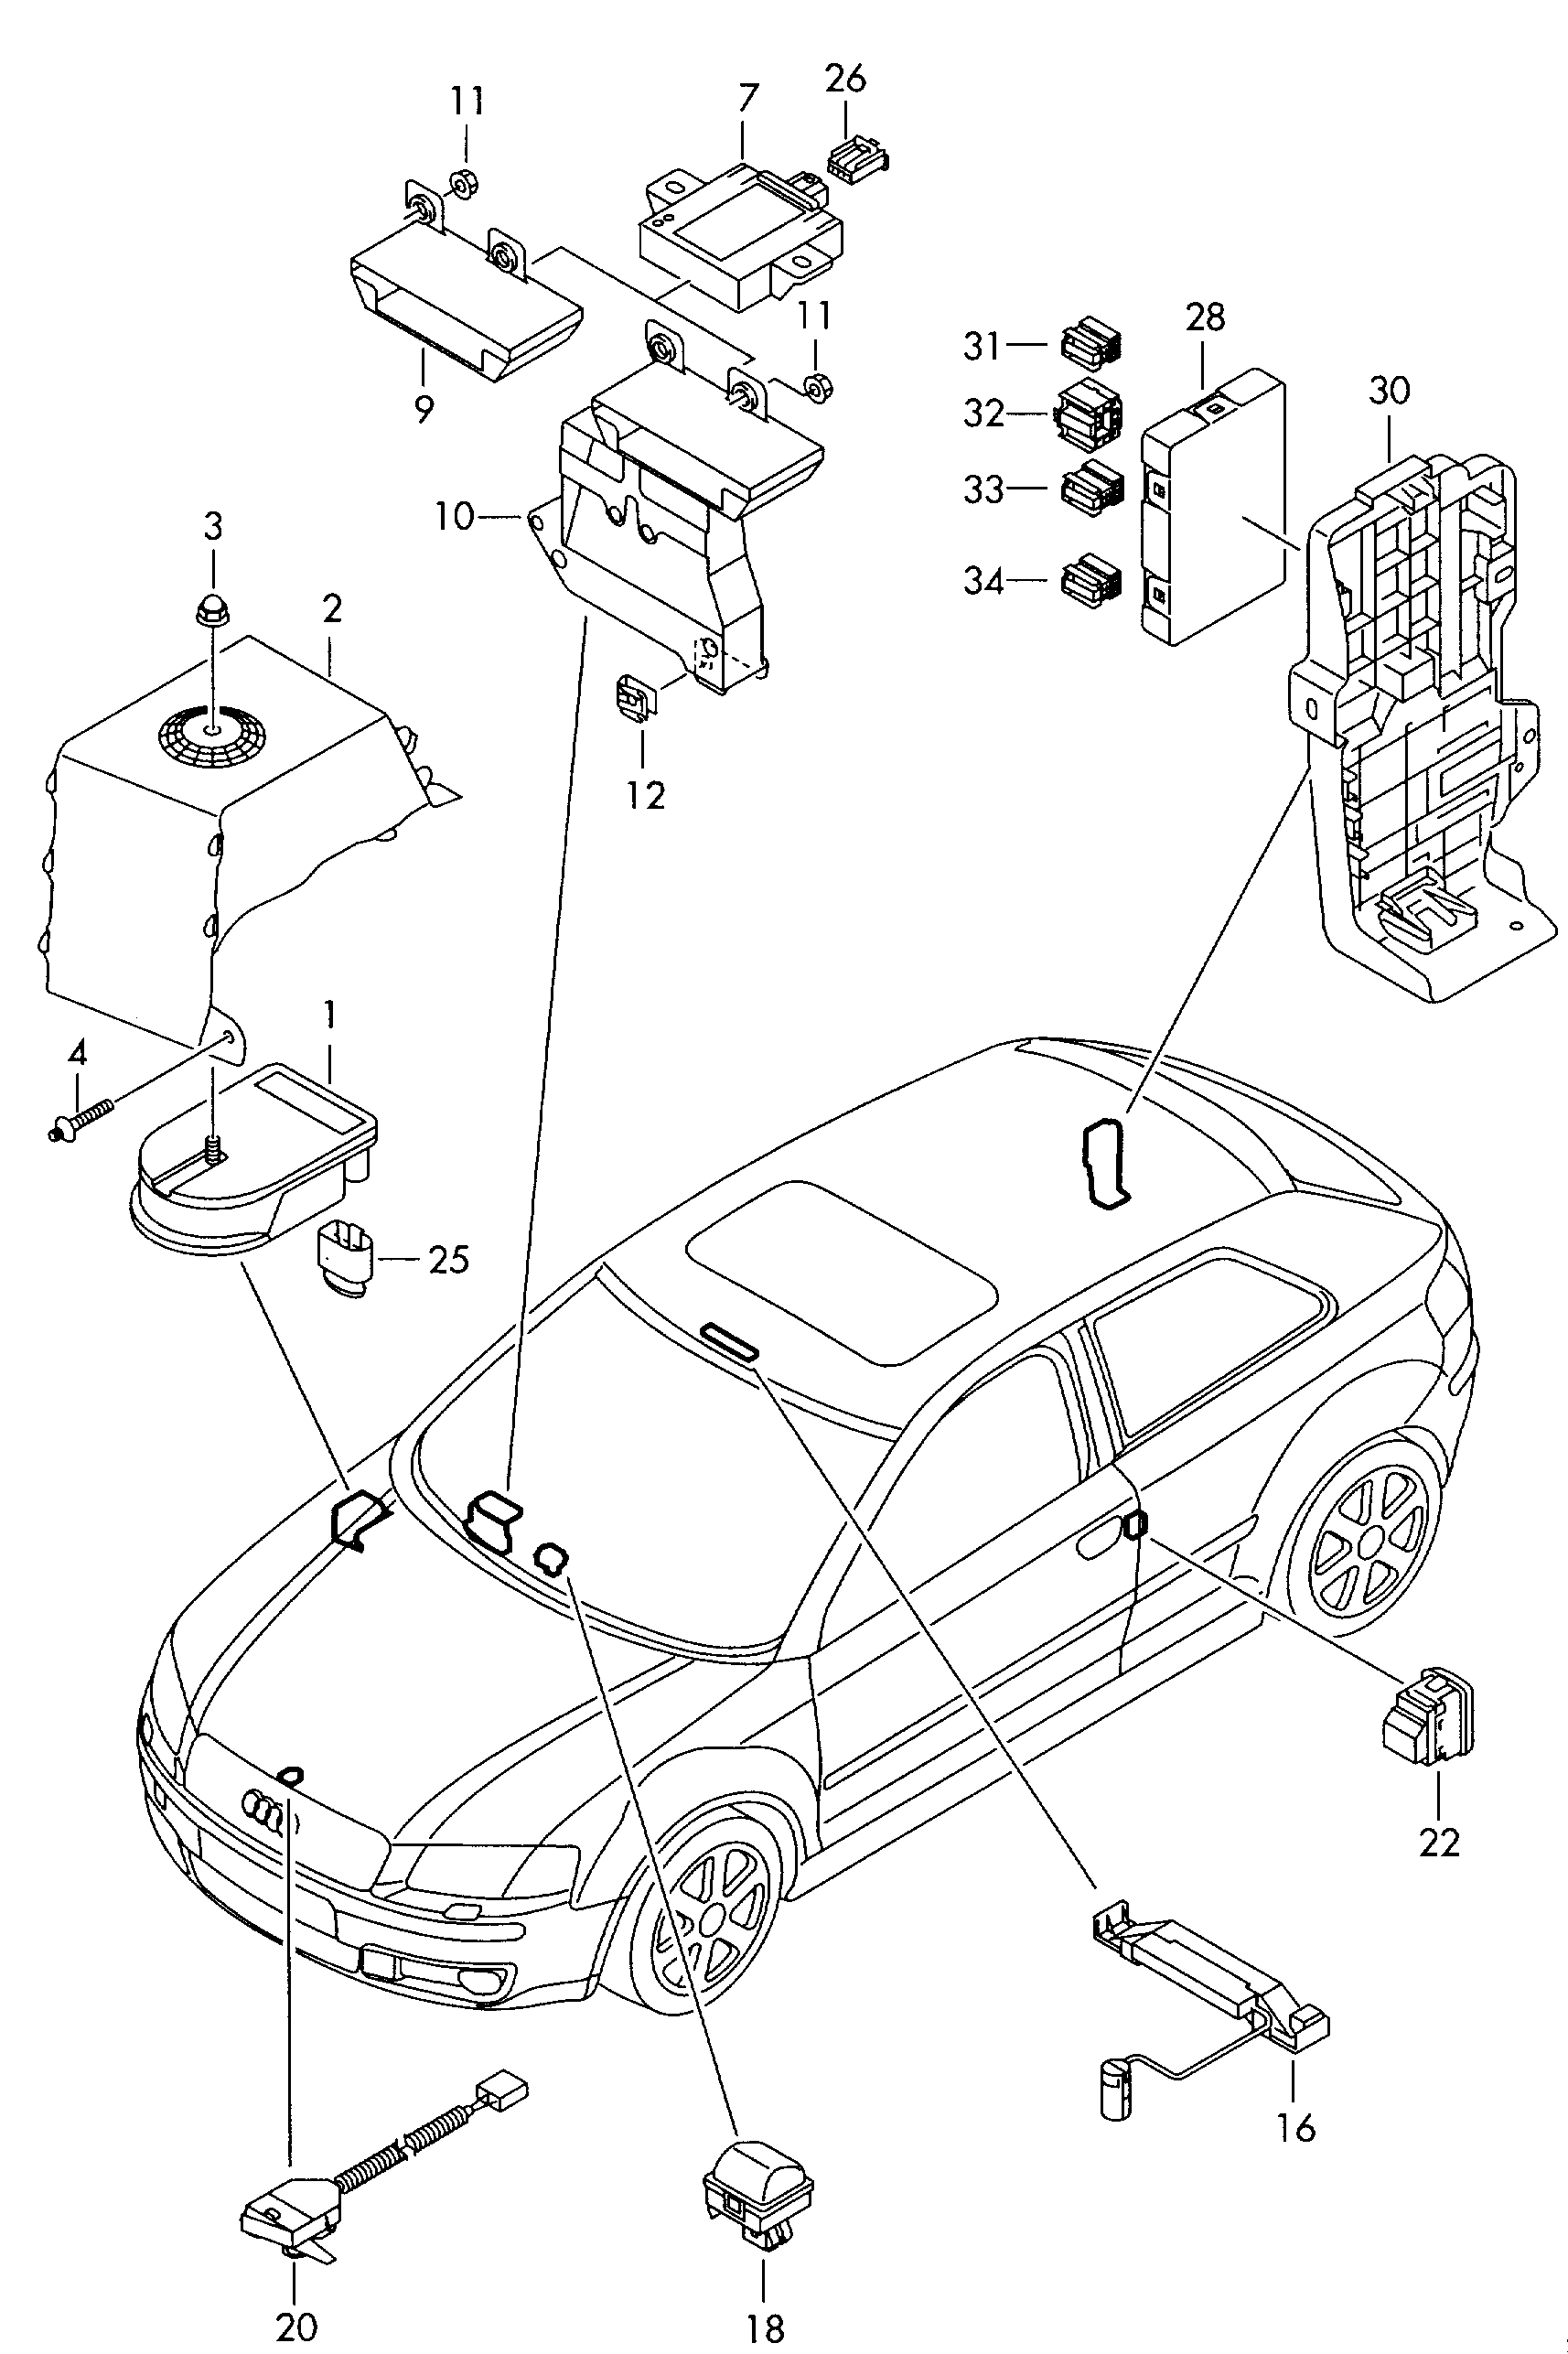 centraal regelapparaat voor
comfortsysteem - Audi A3/S3/Sportb/qu.(A3)  